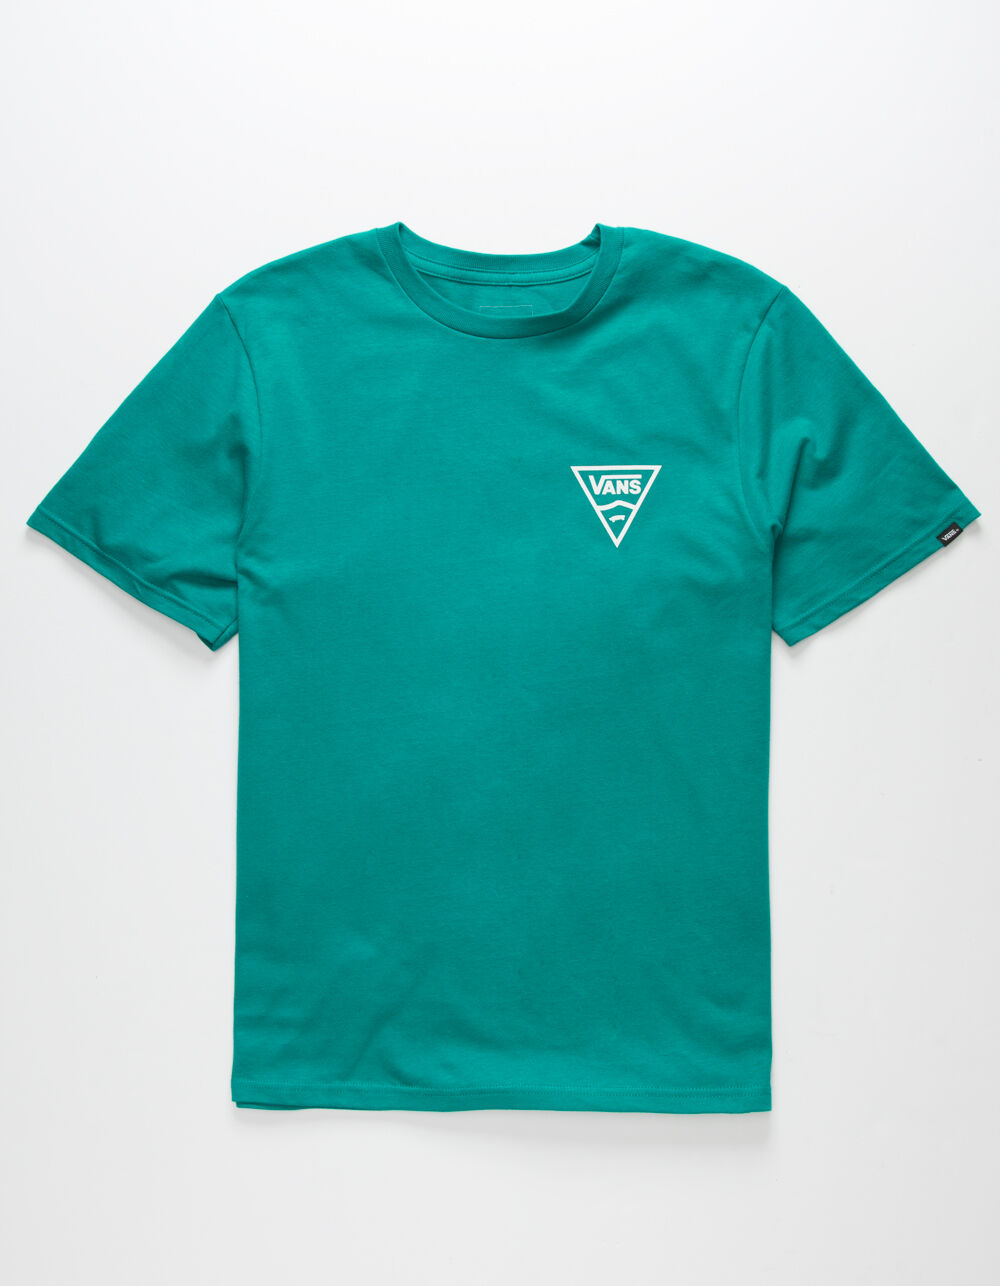 VANS Floral Triangle Boys T-Shirt - TEAL GREEN | Tillys